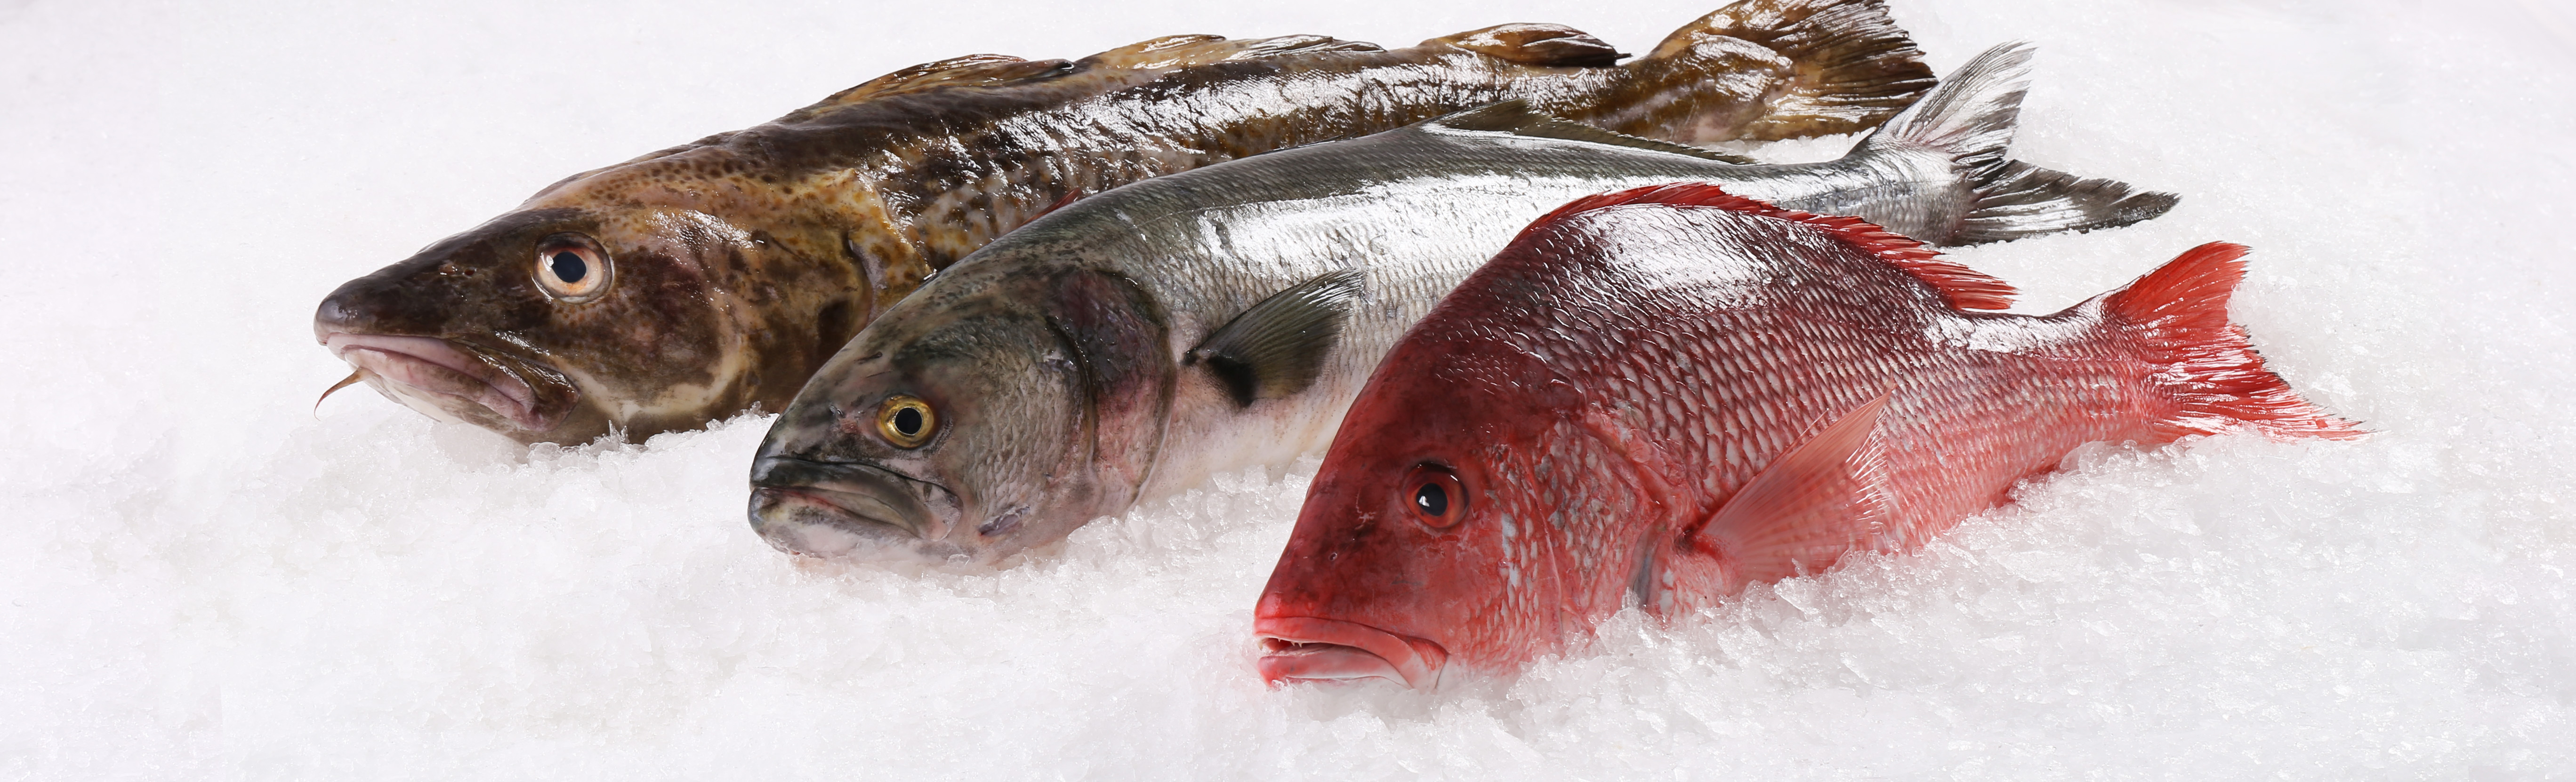 Whole Fish | Buy Fresh Fish Online - Citarella